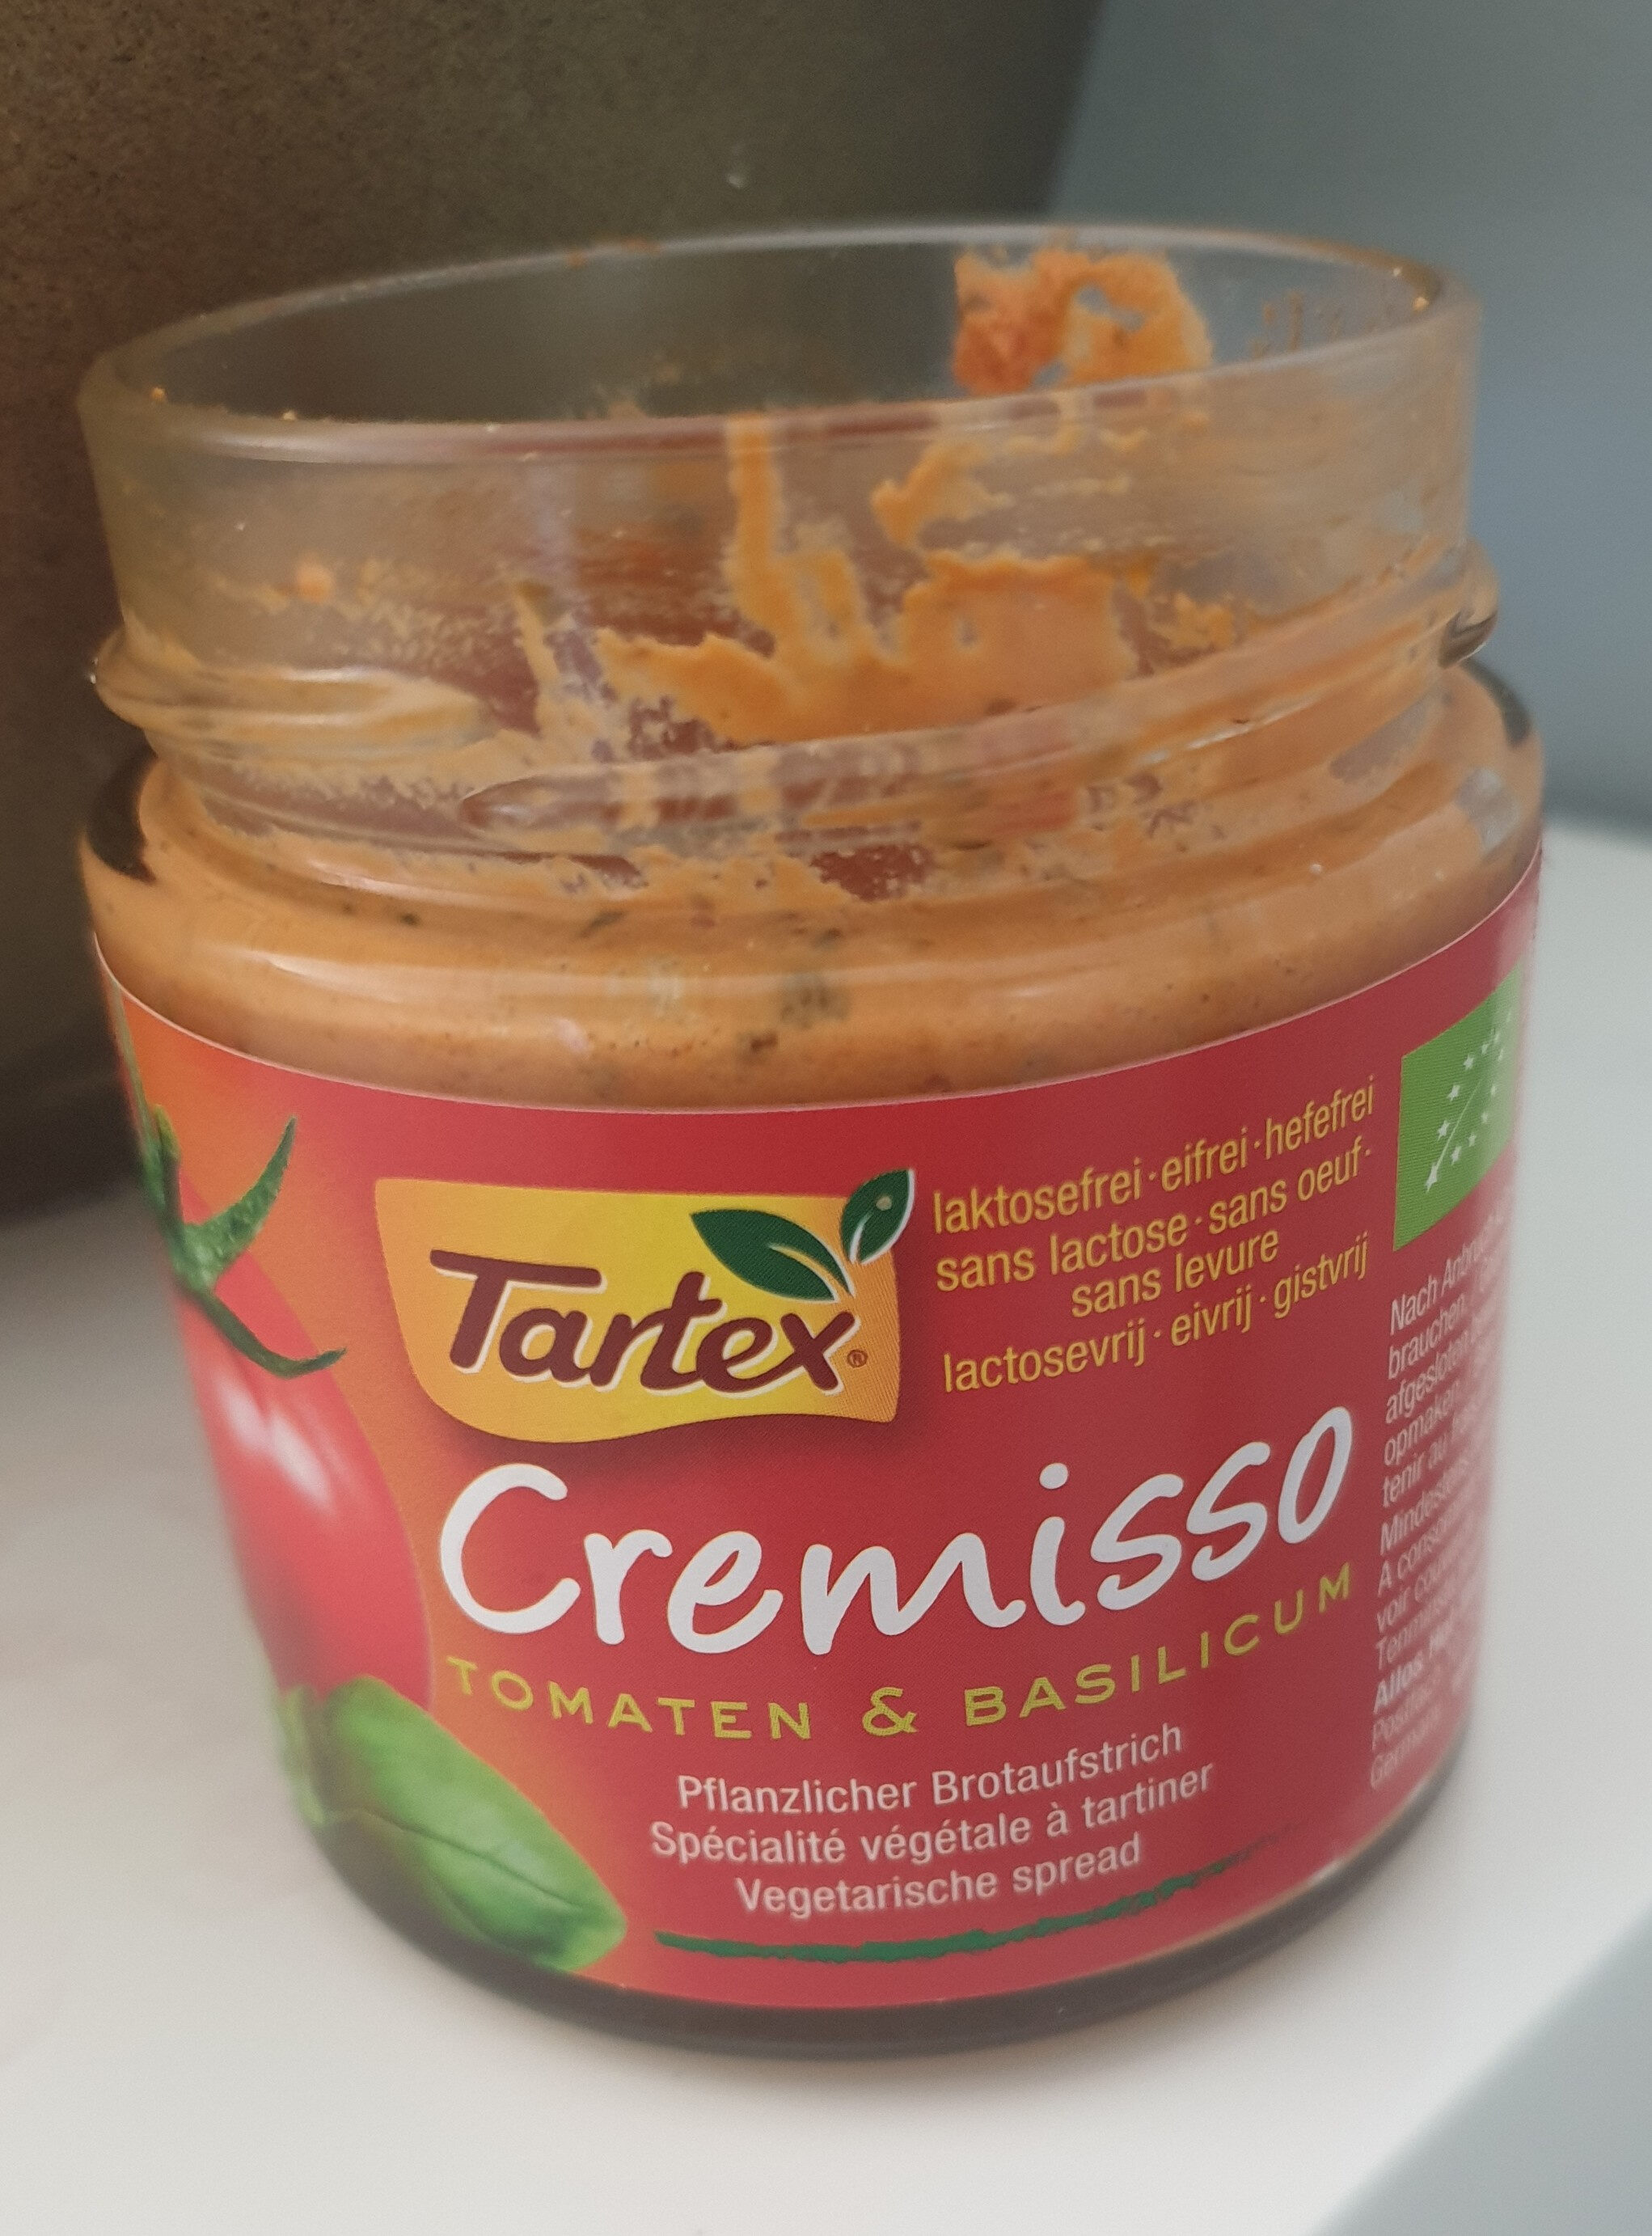 Tartex Cremisso Tomaat Basilic - Product - fr